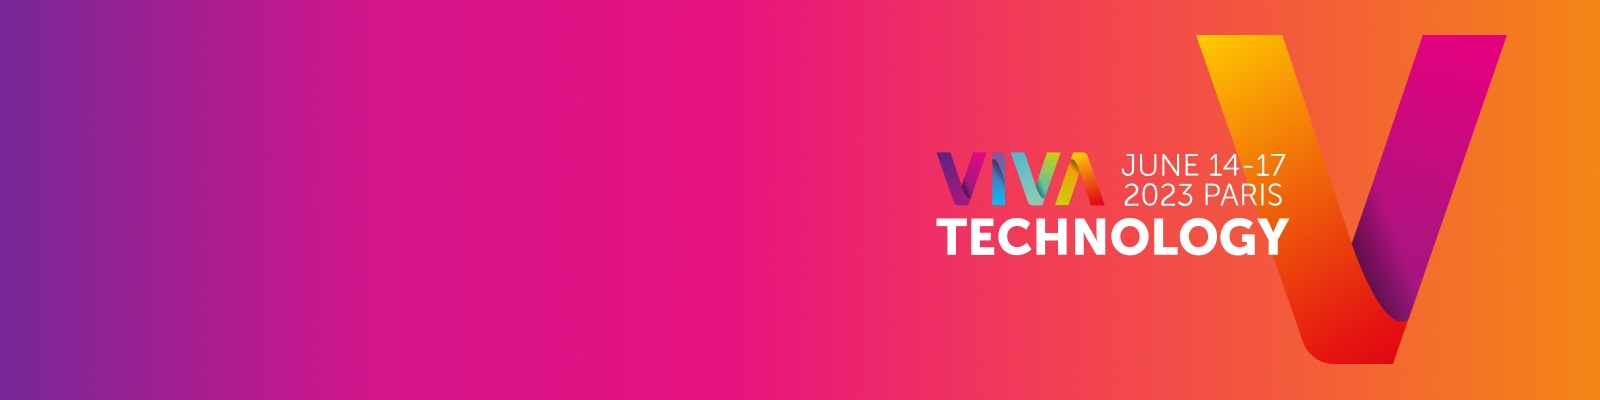 vivatech banner